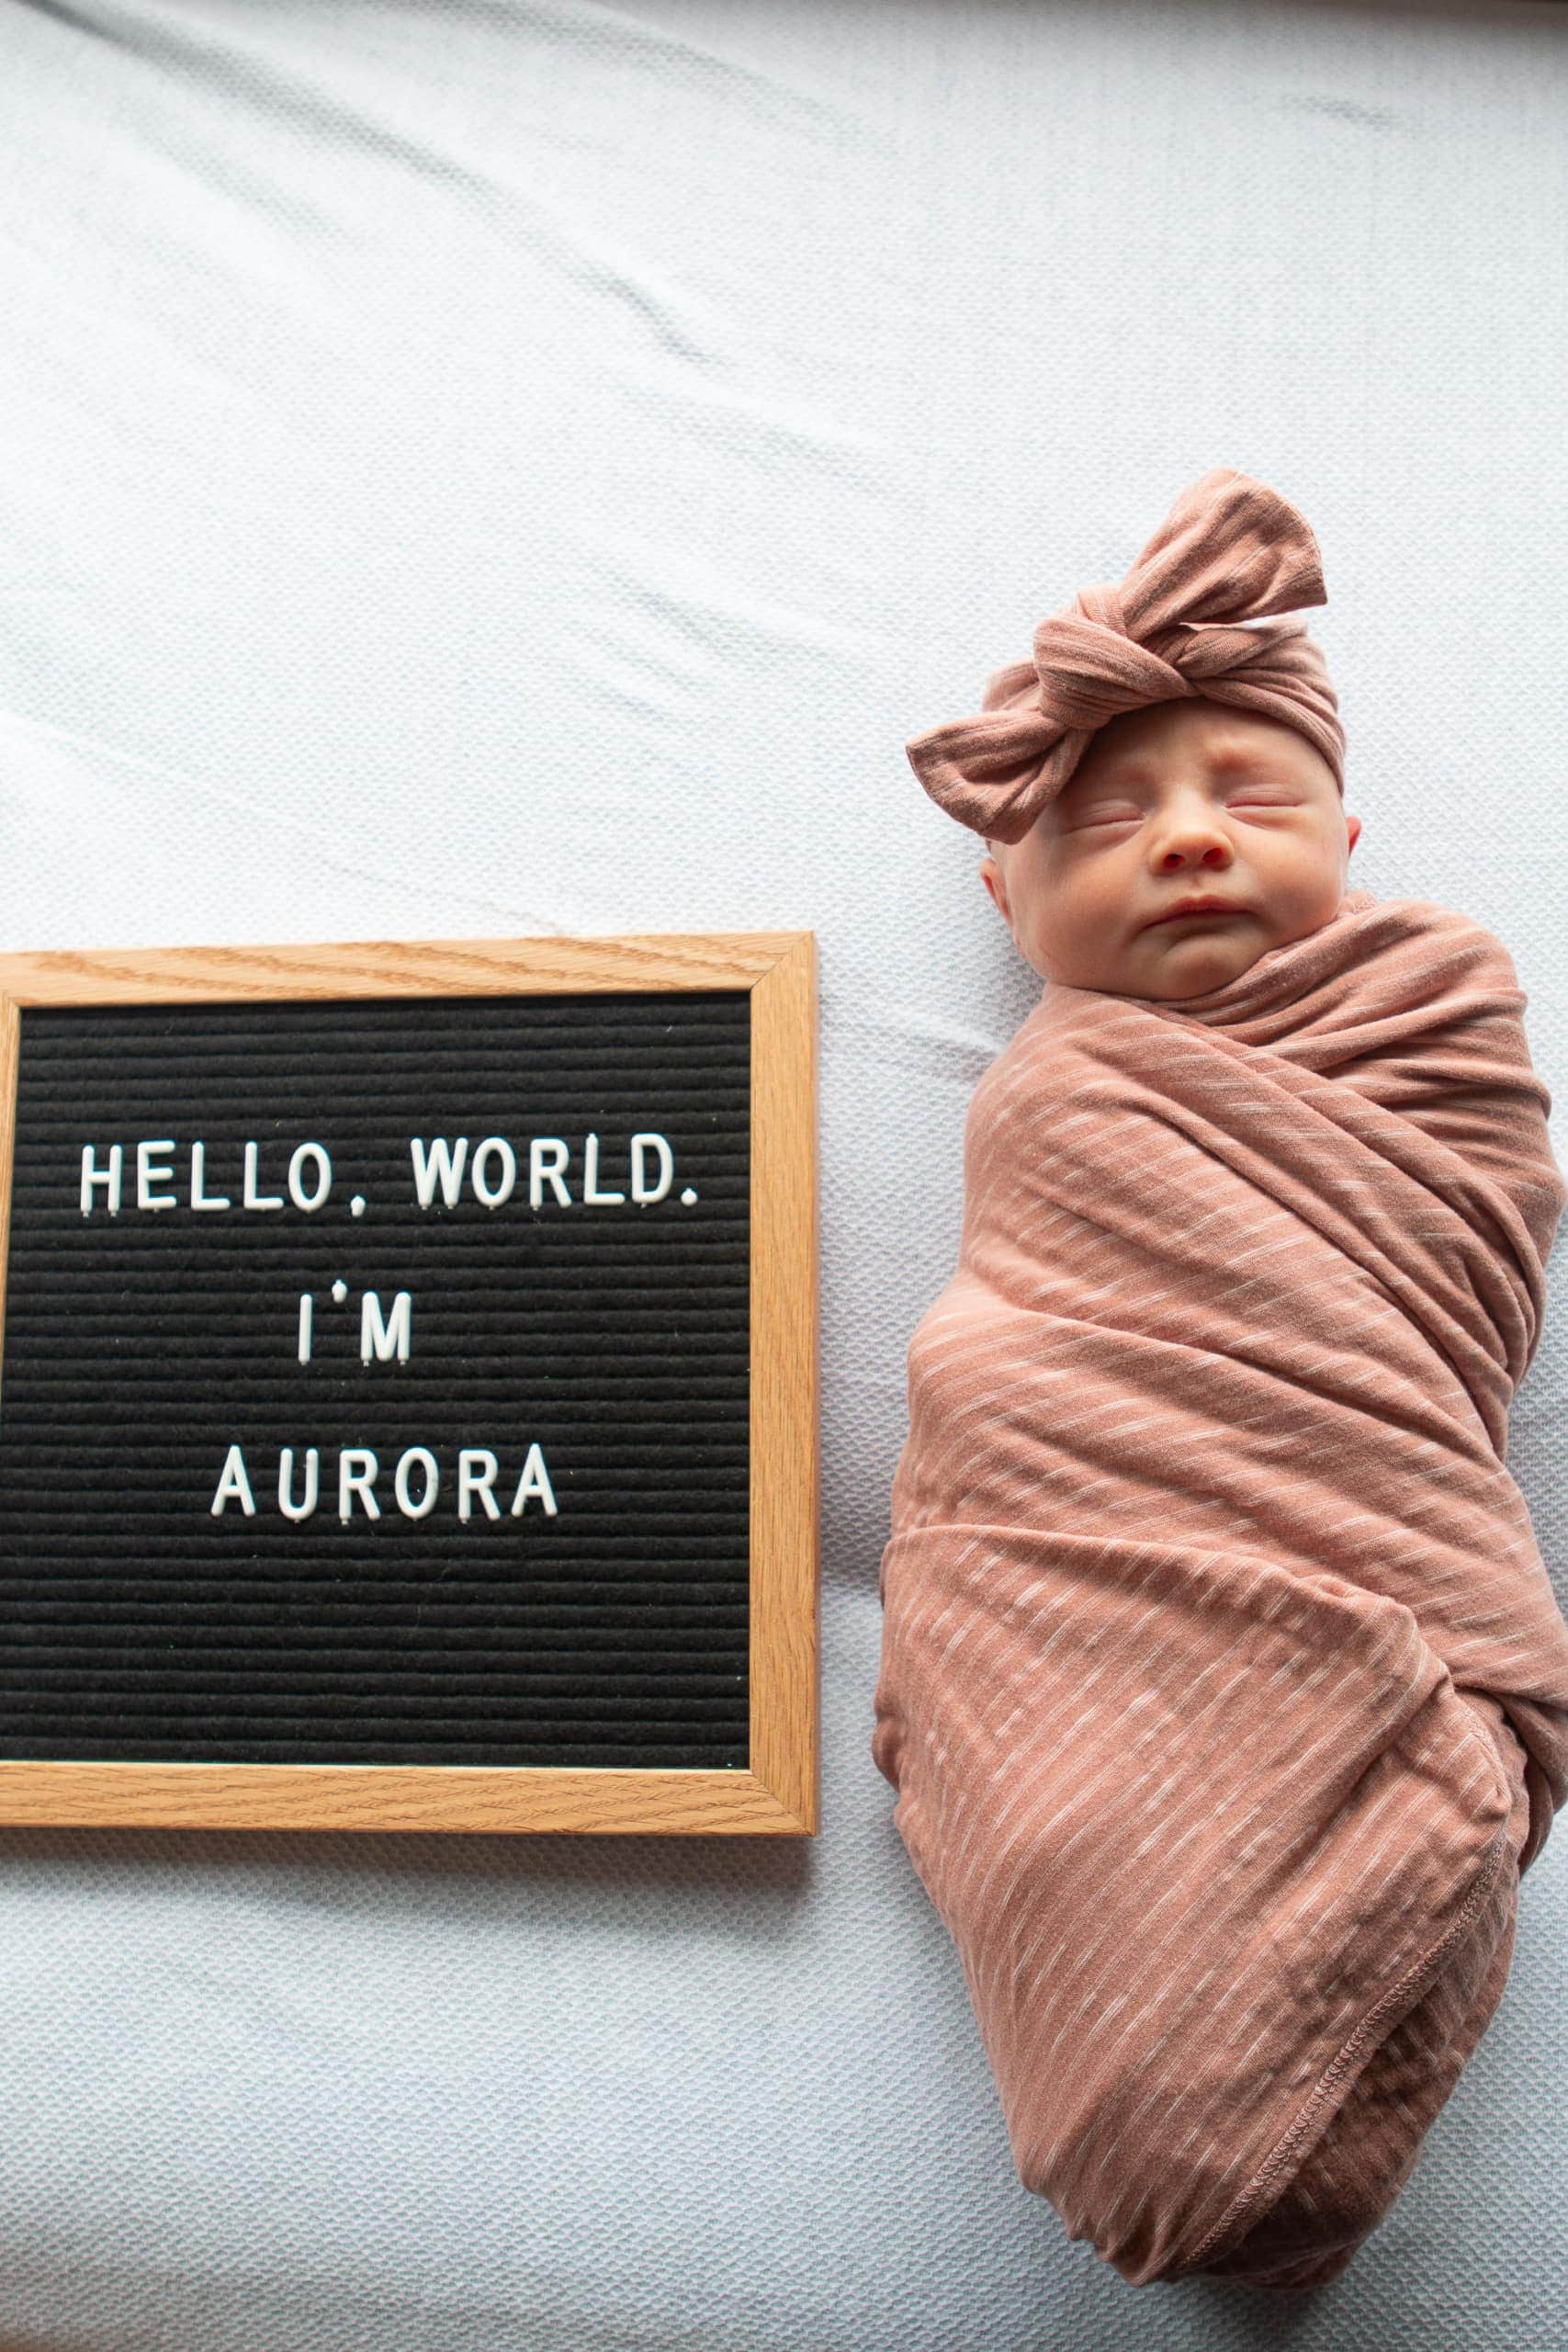 Meet our Daughter, Aurora